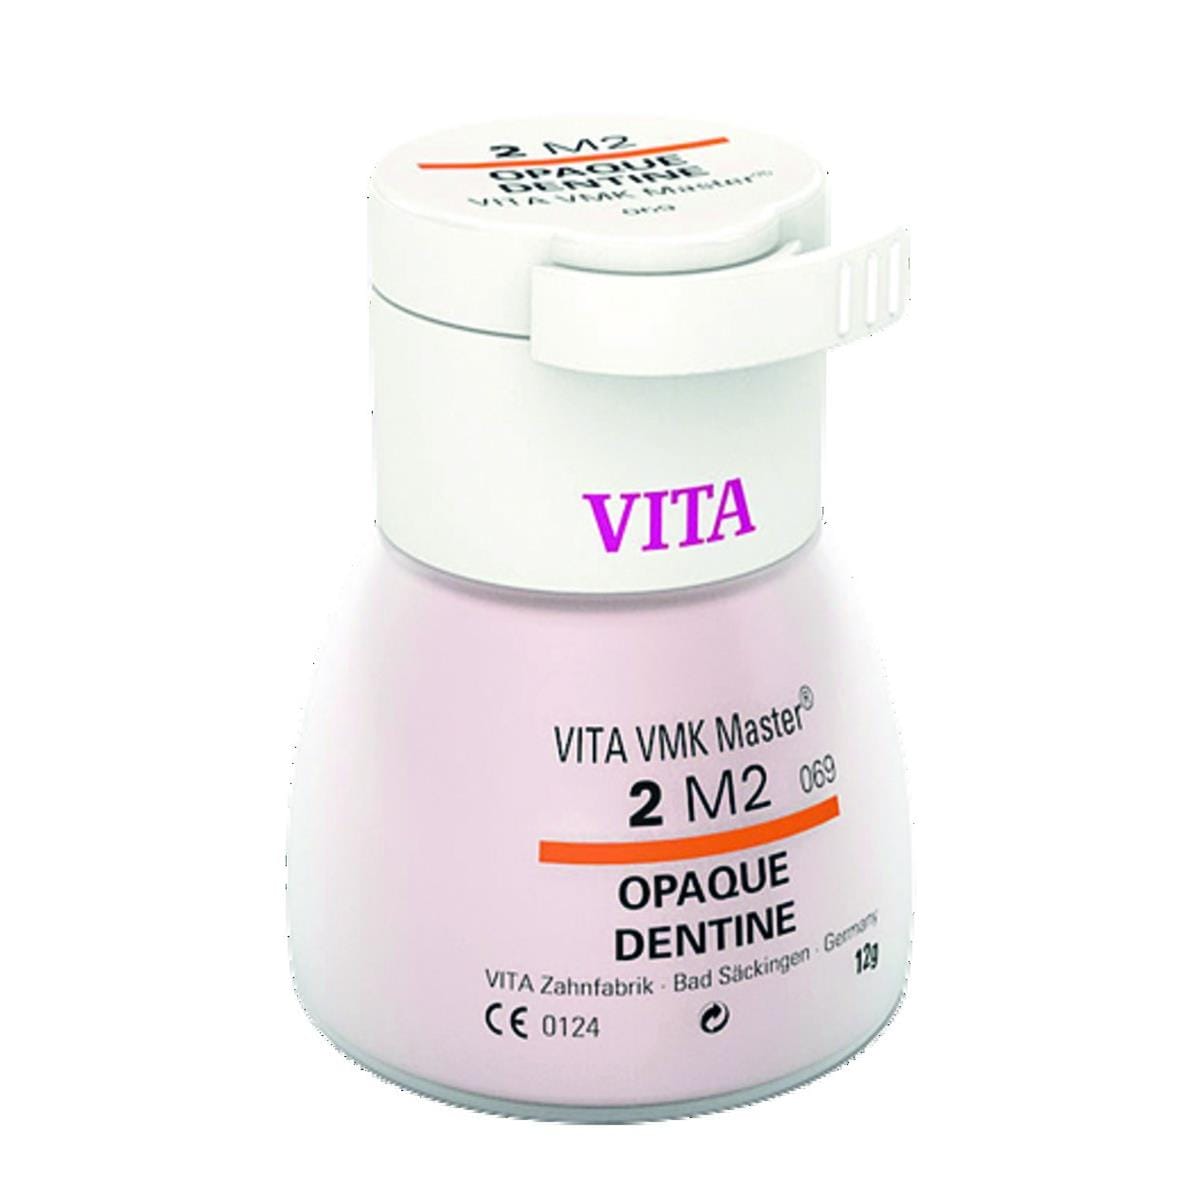 VMK Master VITA - Dentine Opaque - 3R1,5 - Le flacon de 12 g